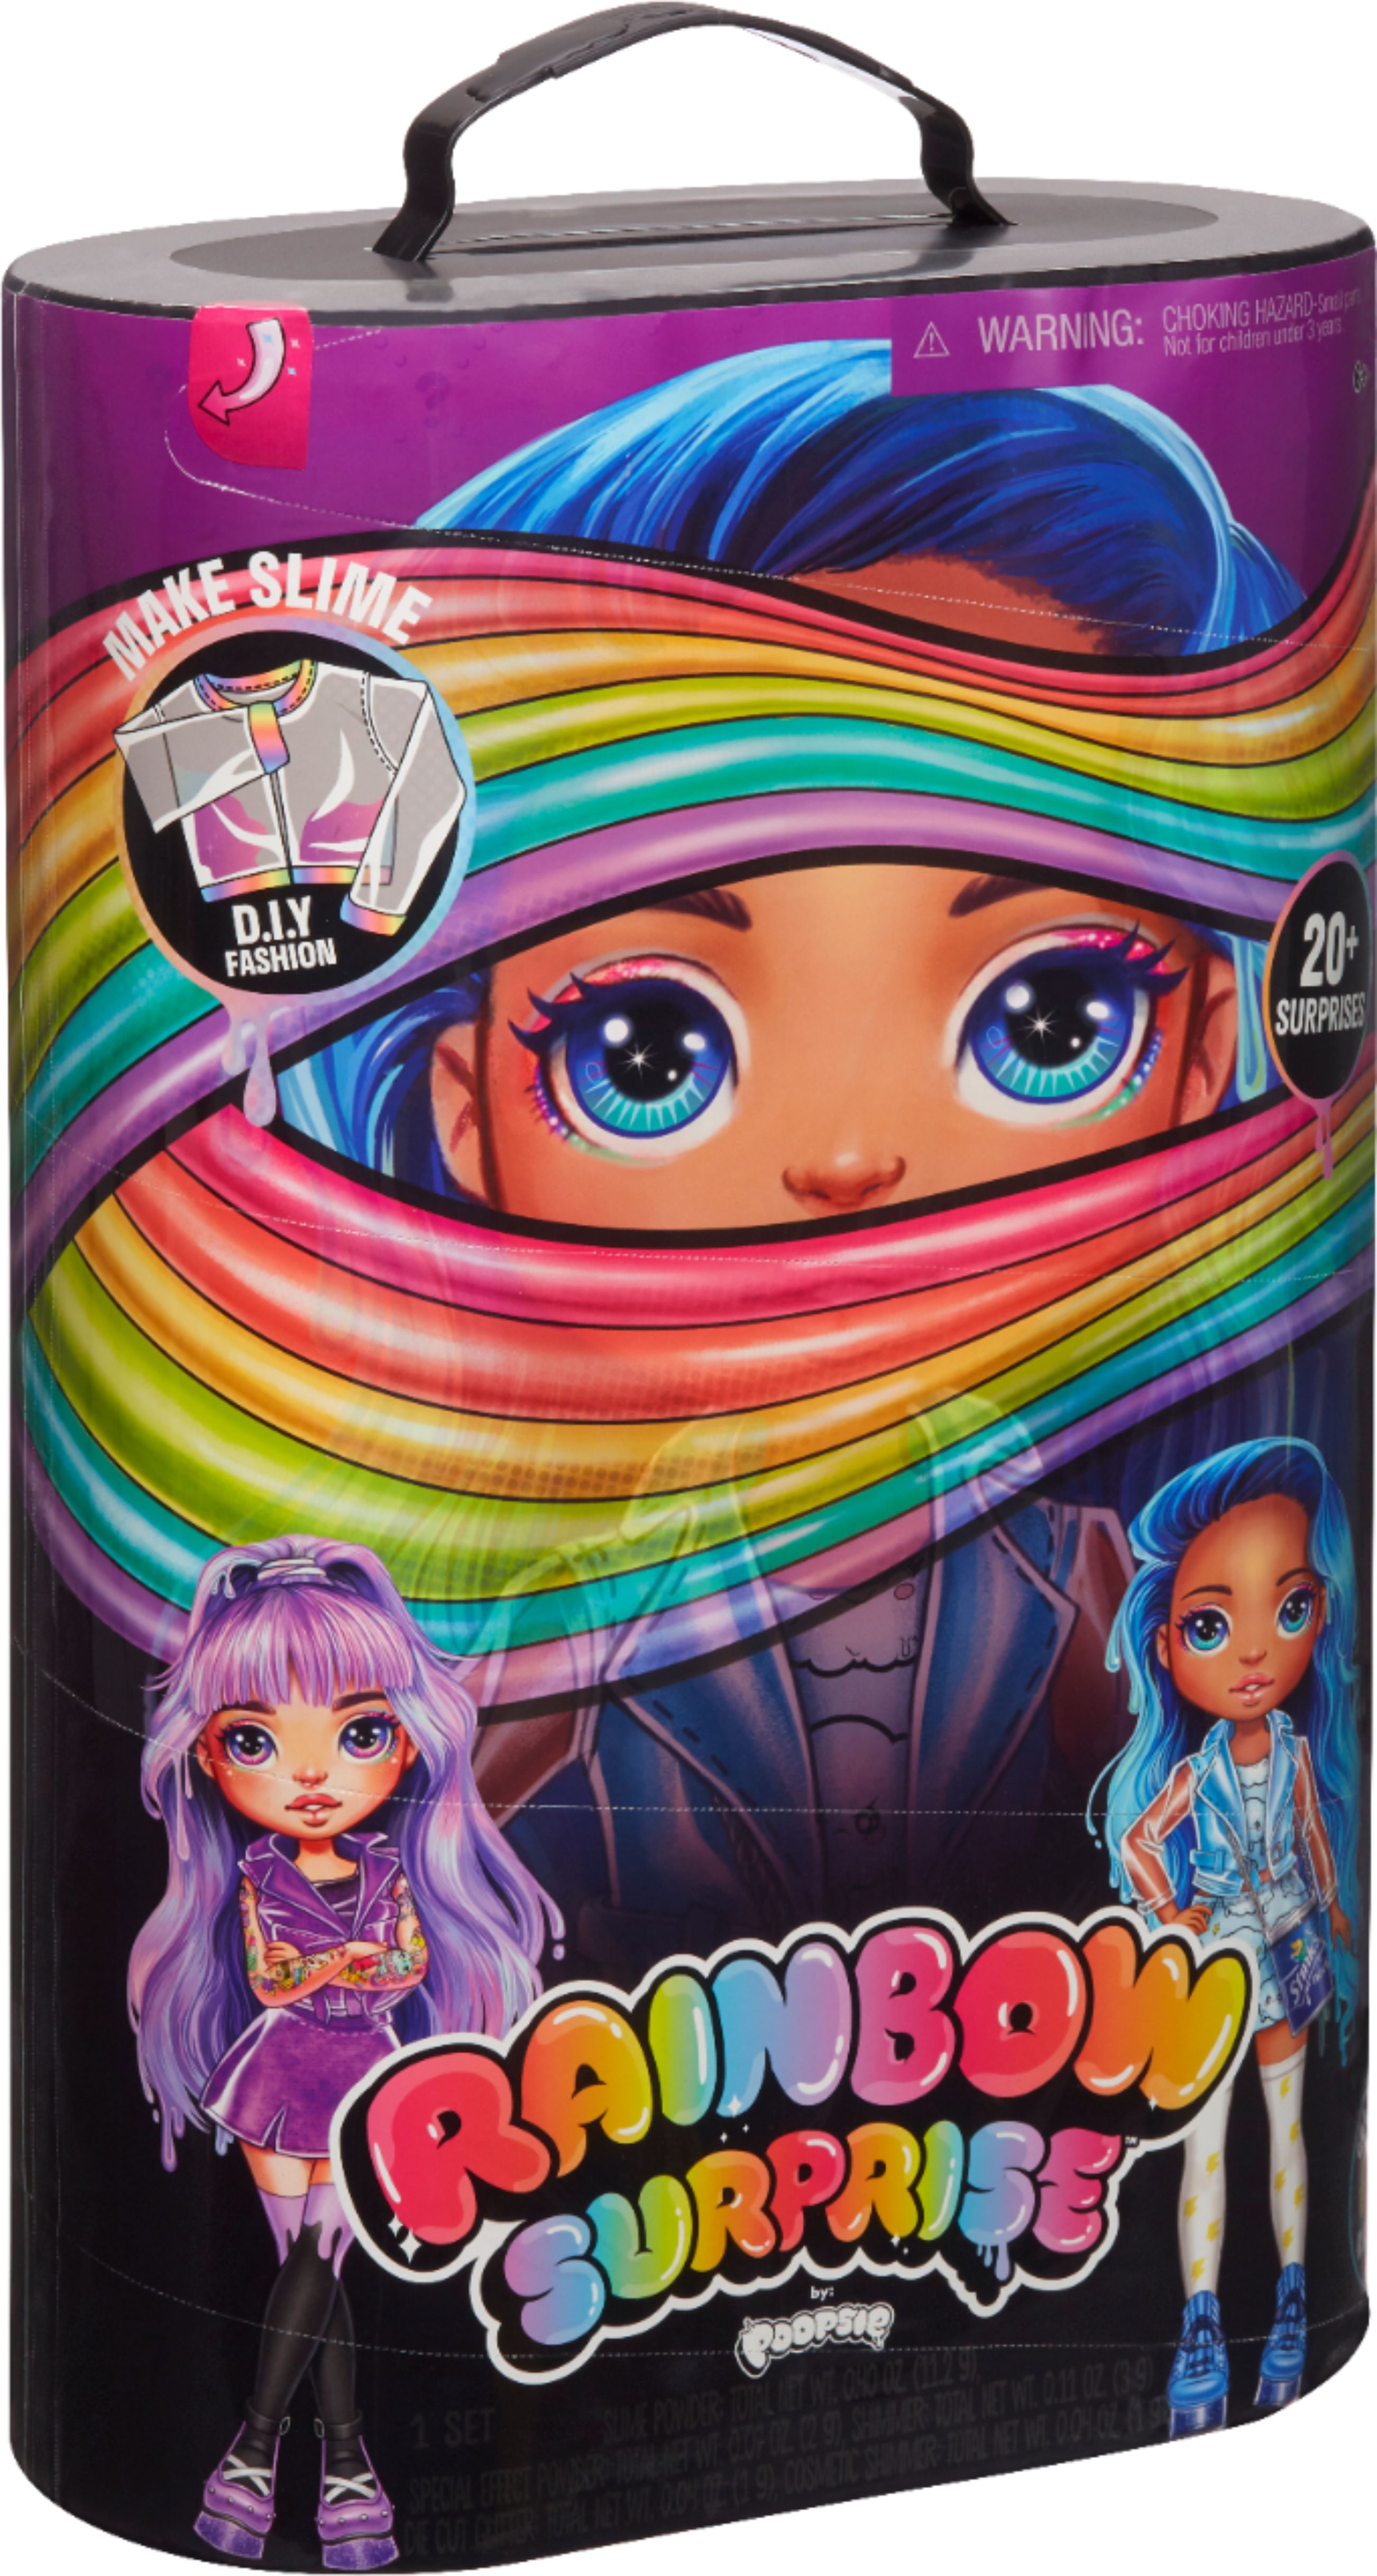 561118 for sale online Poopsie Rainbow Surprise 14" Dolls